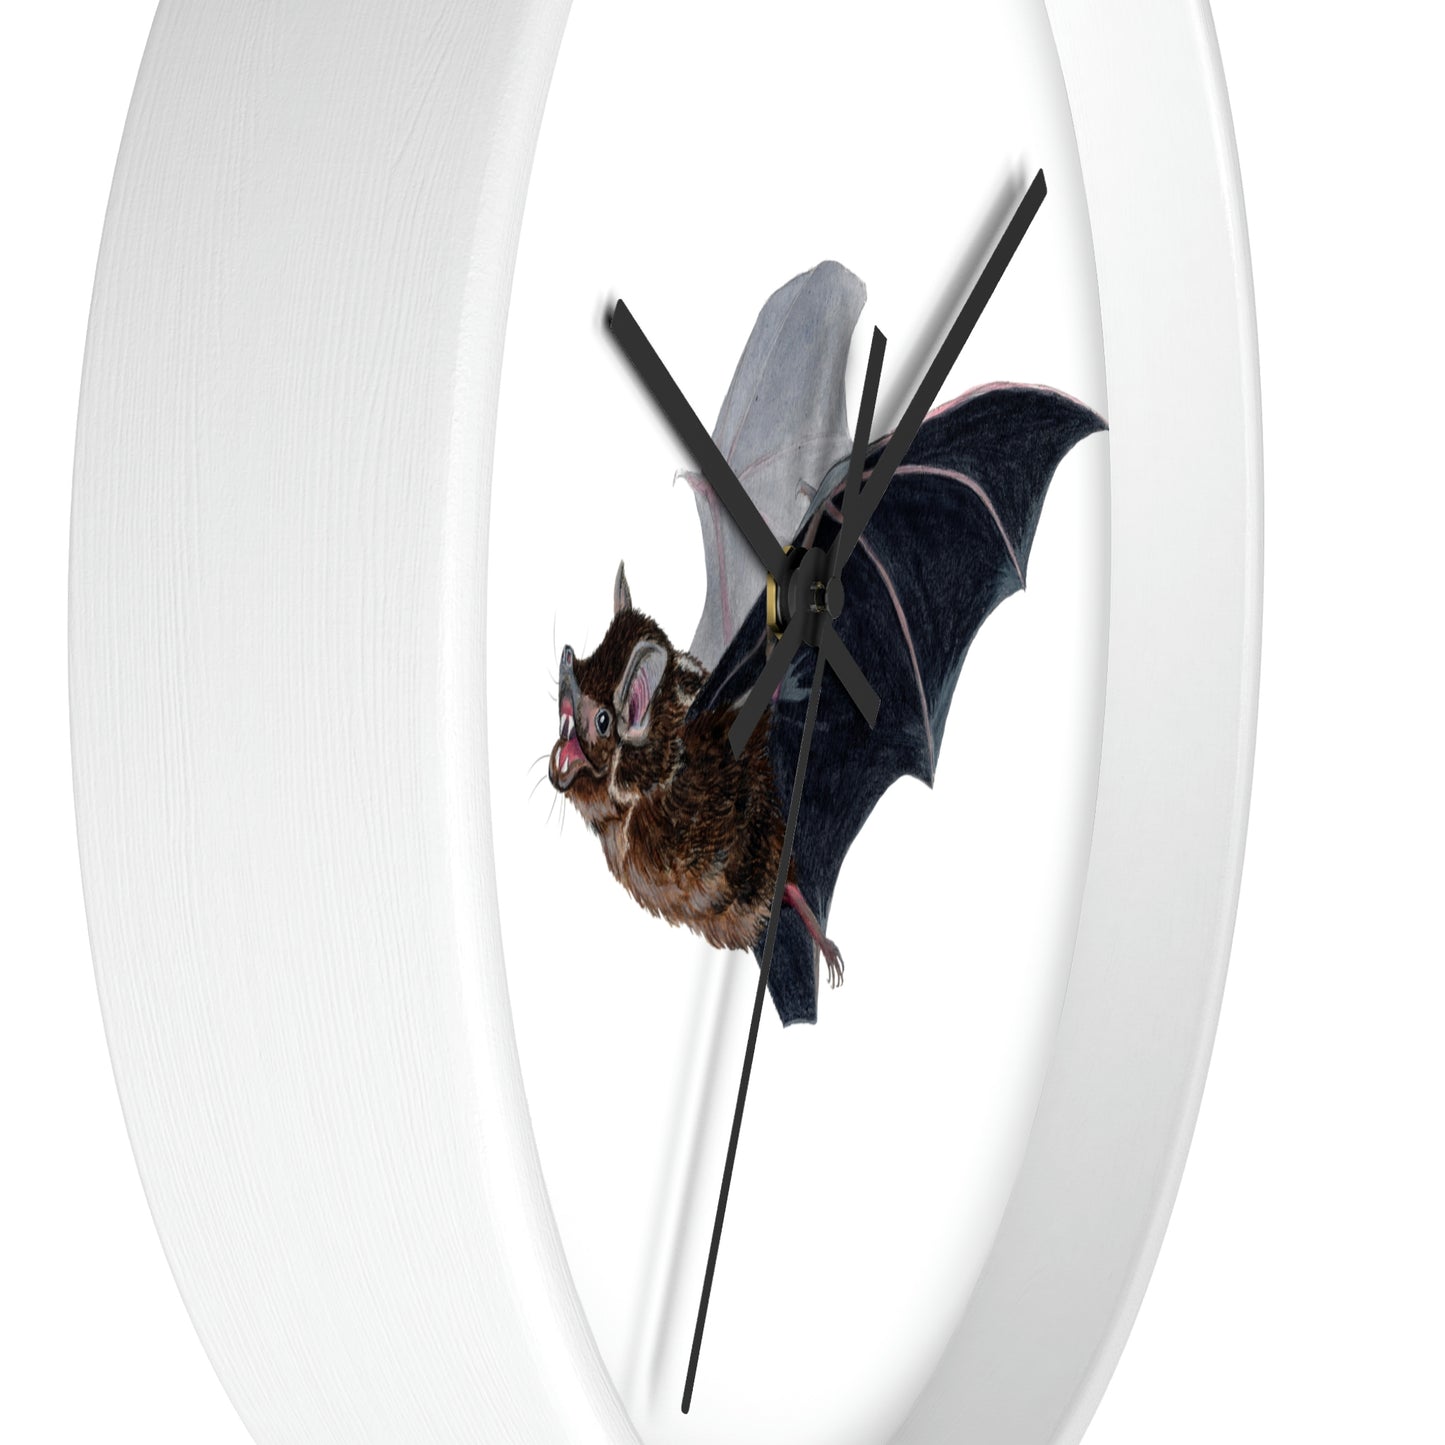 Greater Sac-winged Bat Wall Clock